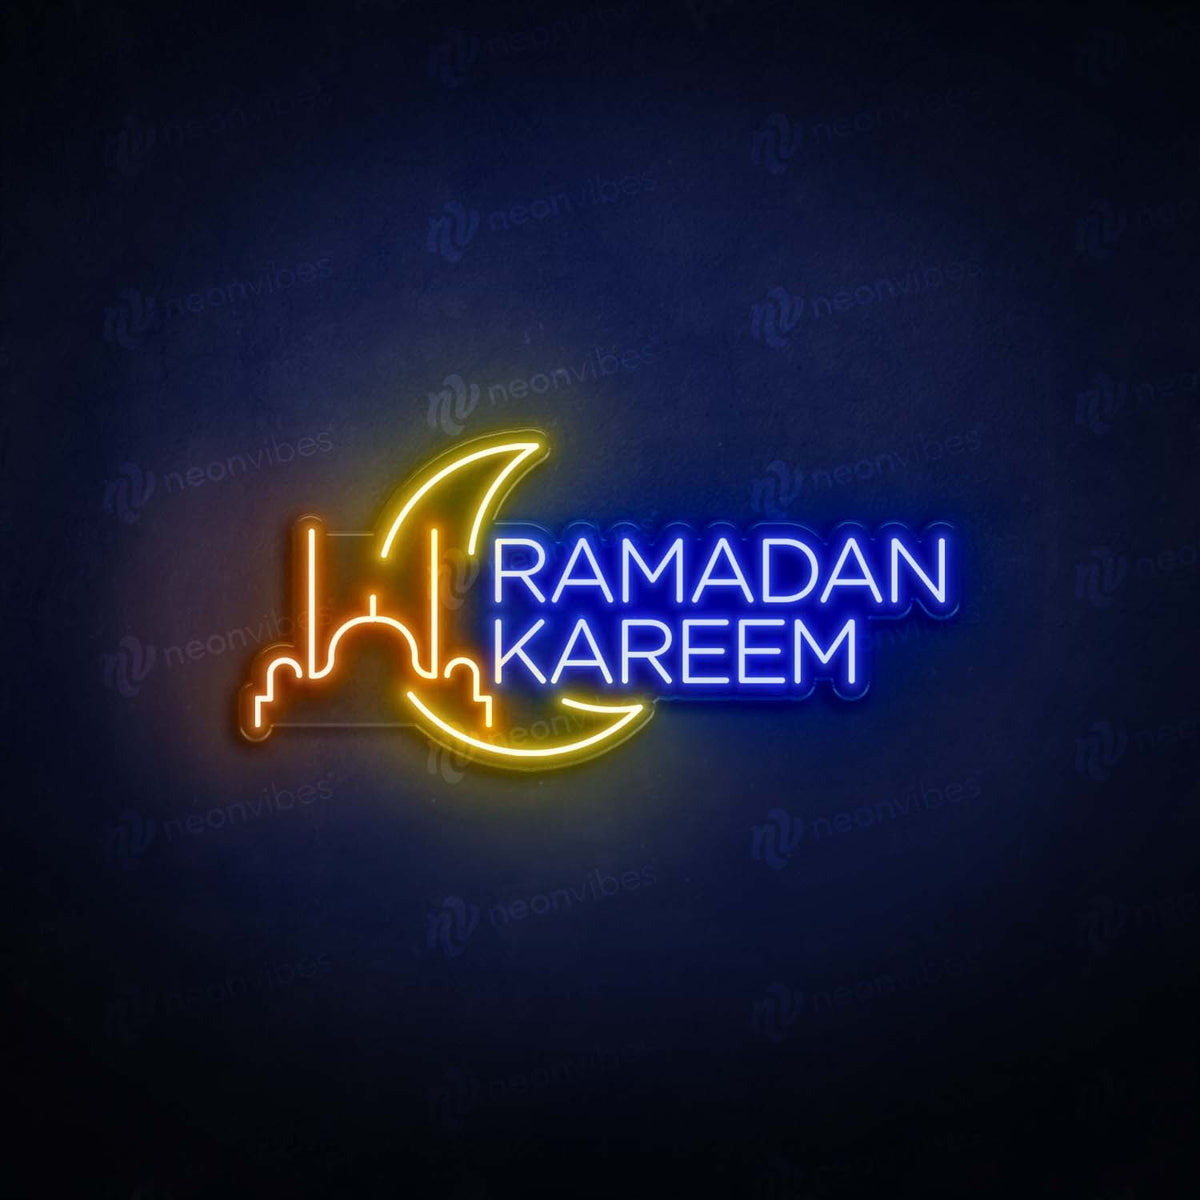 Ramadan kareem neon sign